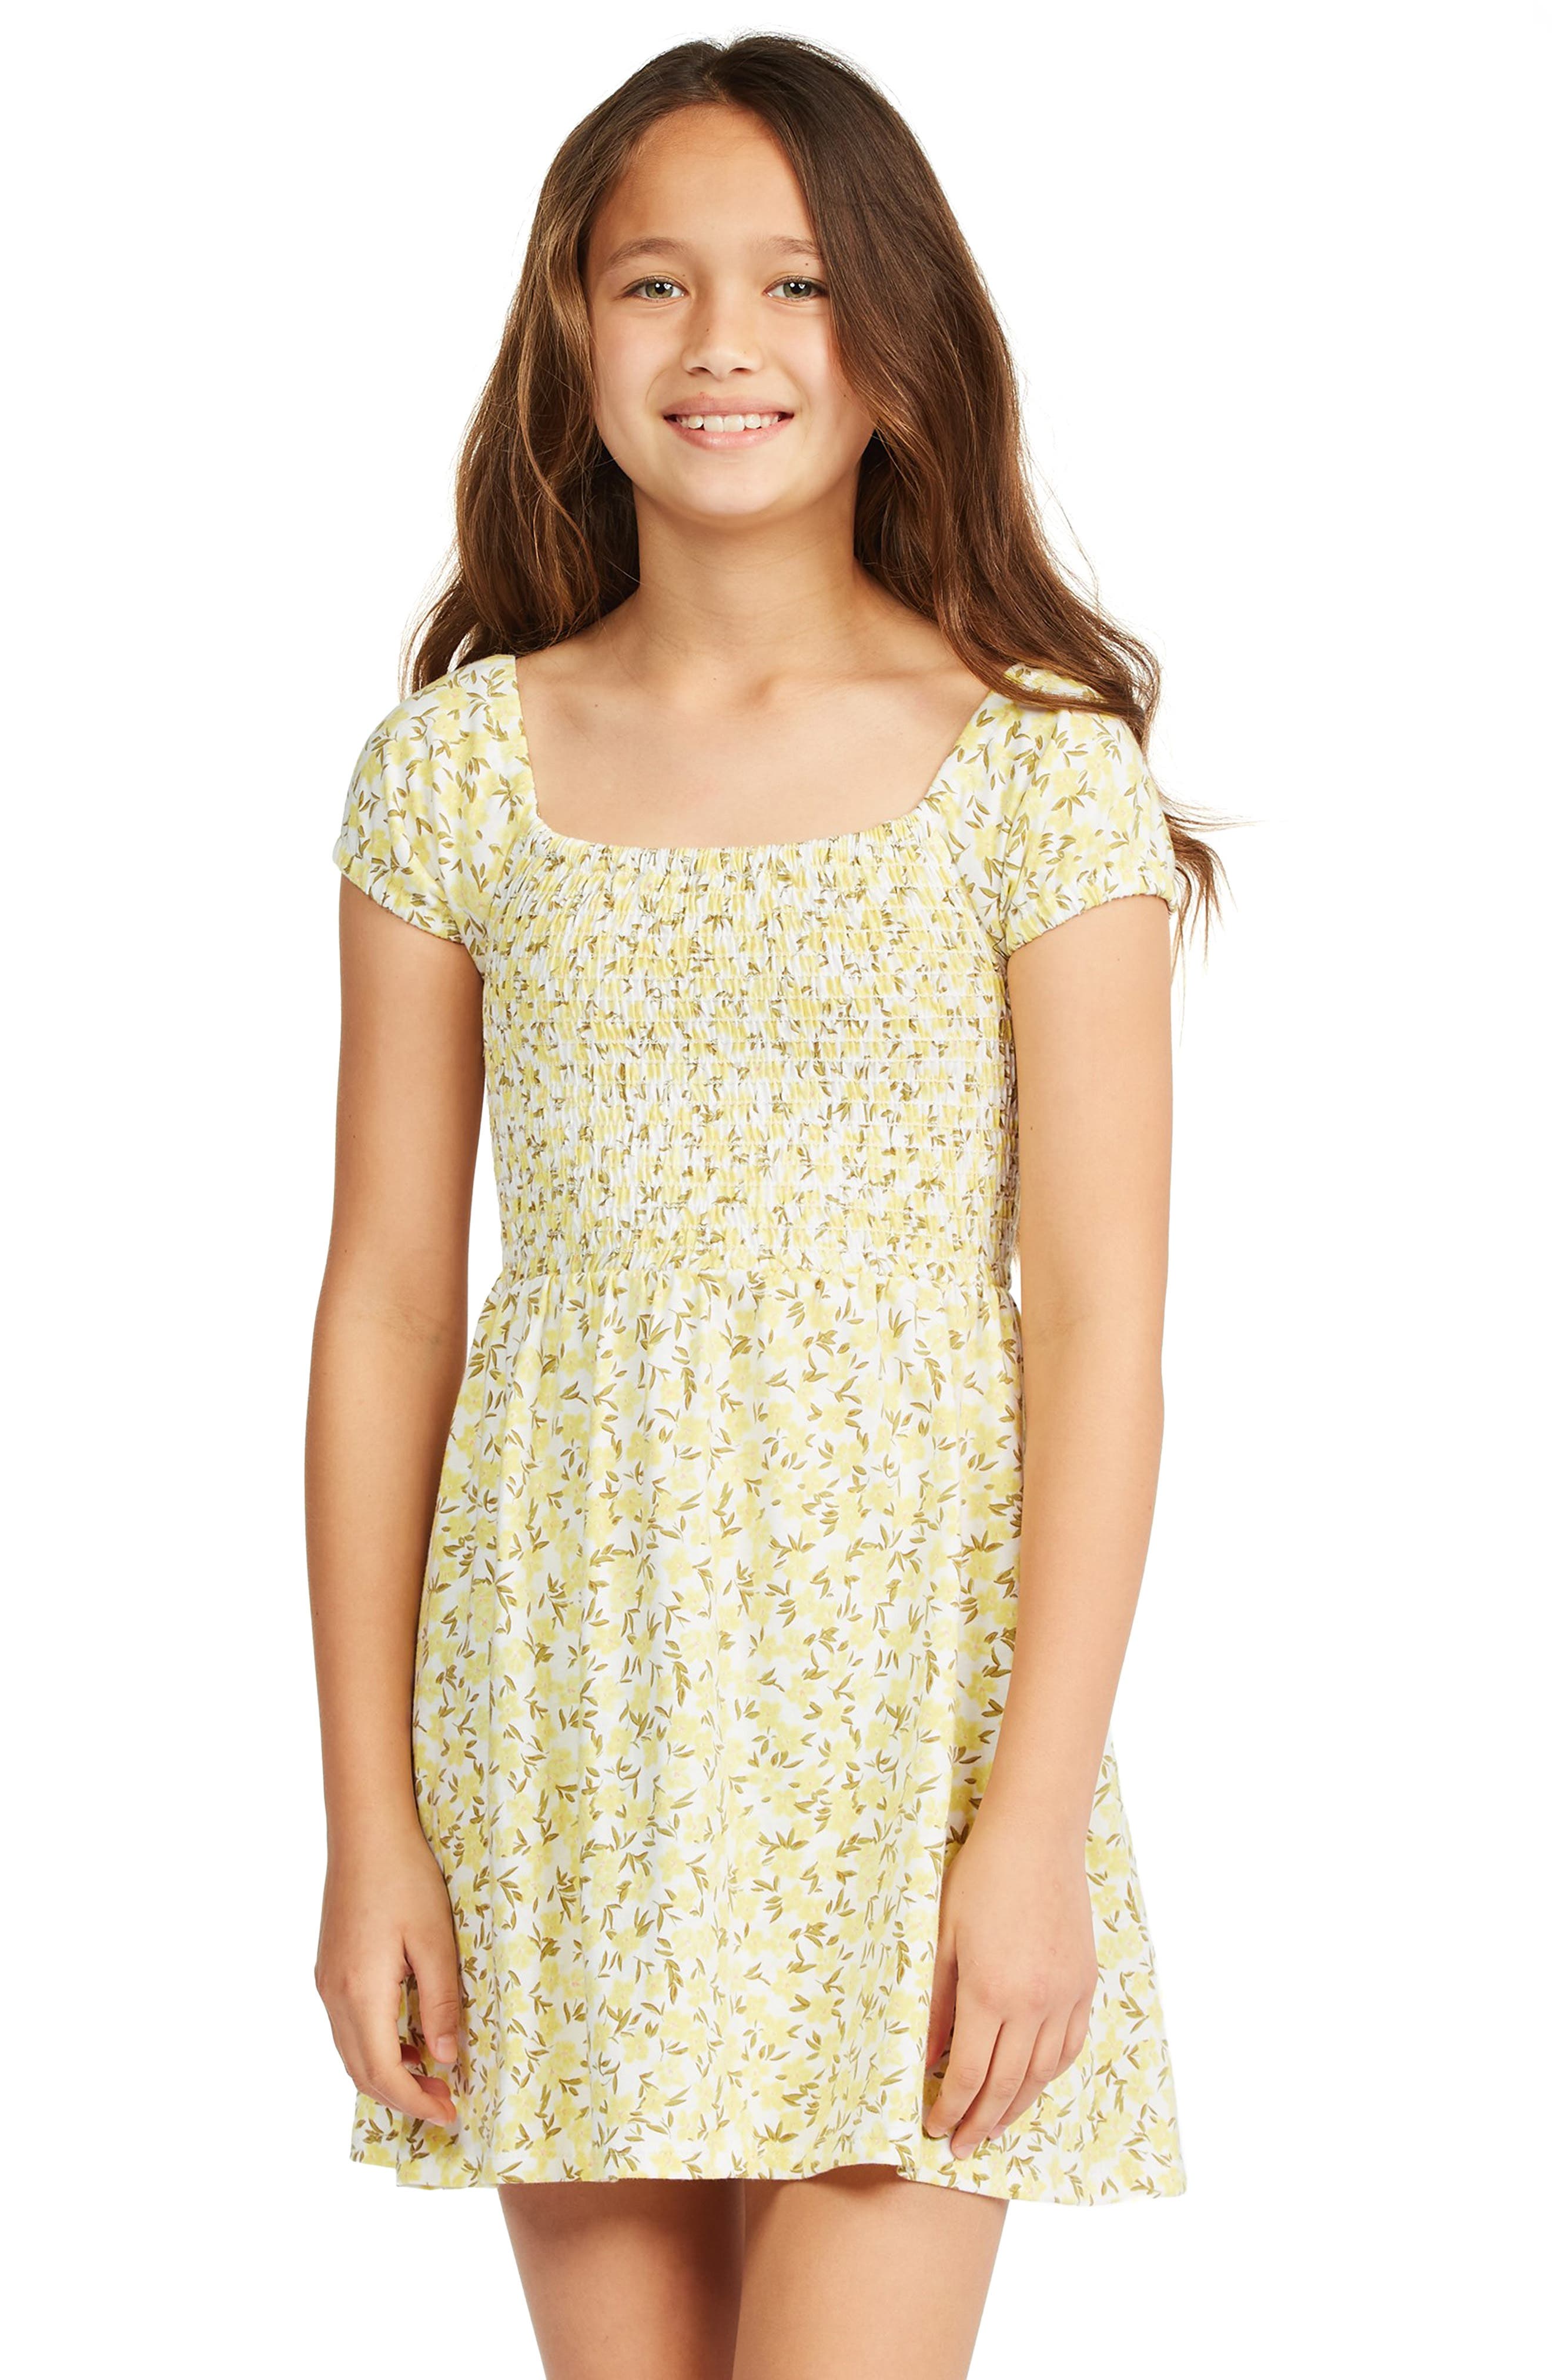 Kid Girls Collared Smocked Dress Sundress Embroidered Dress Yellow Easter Dress 